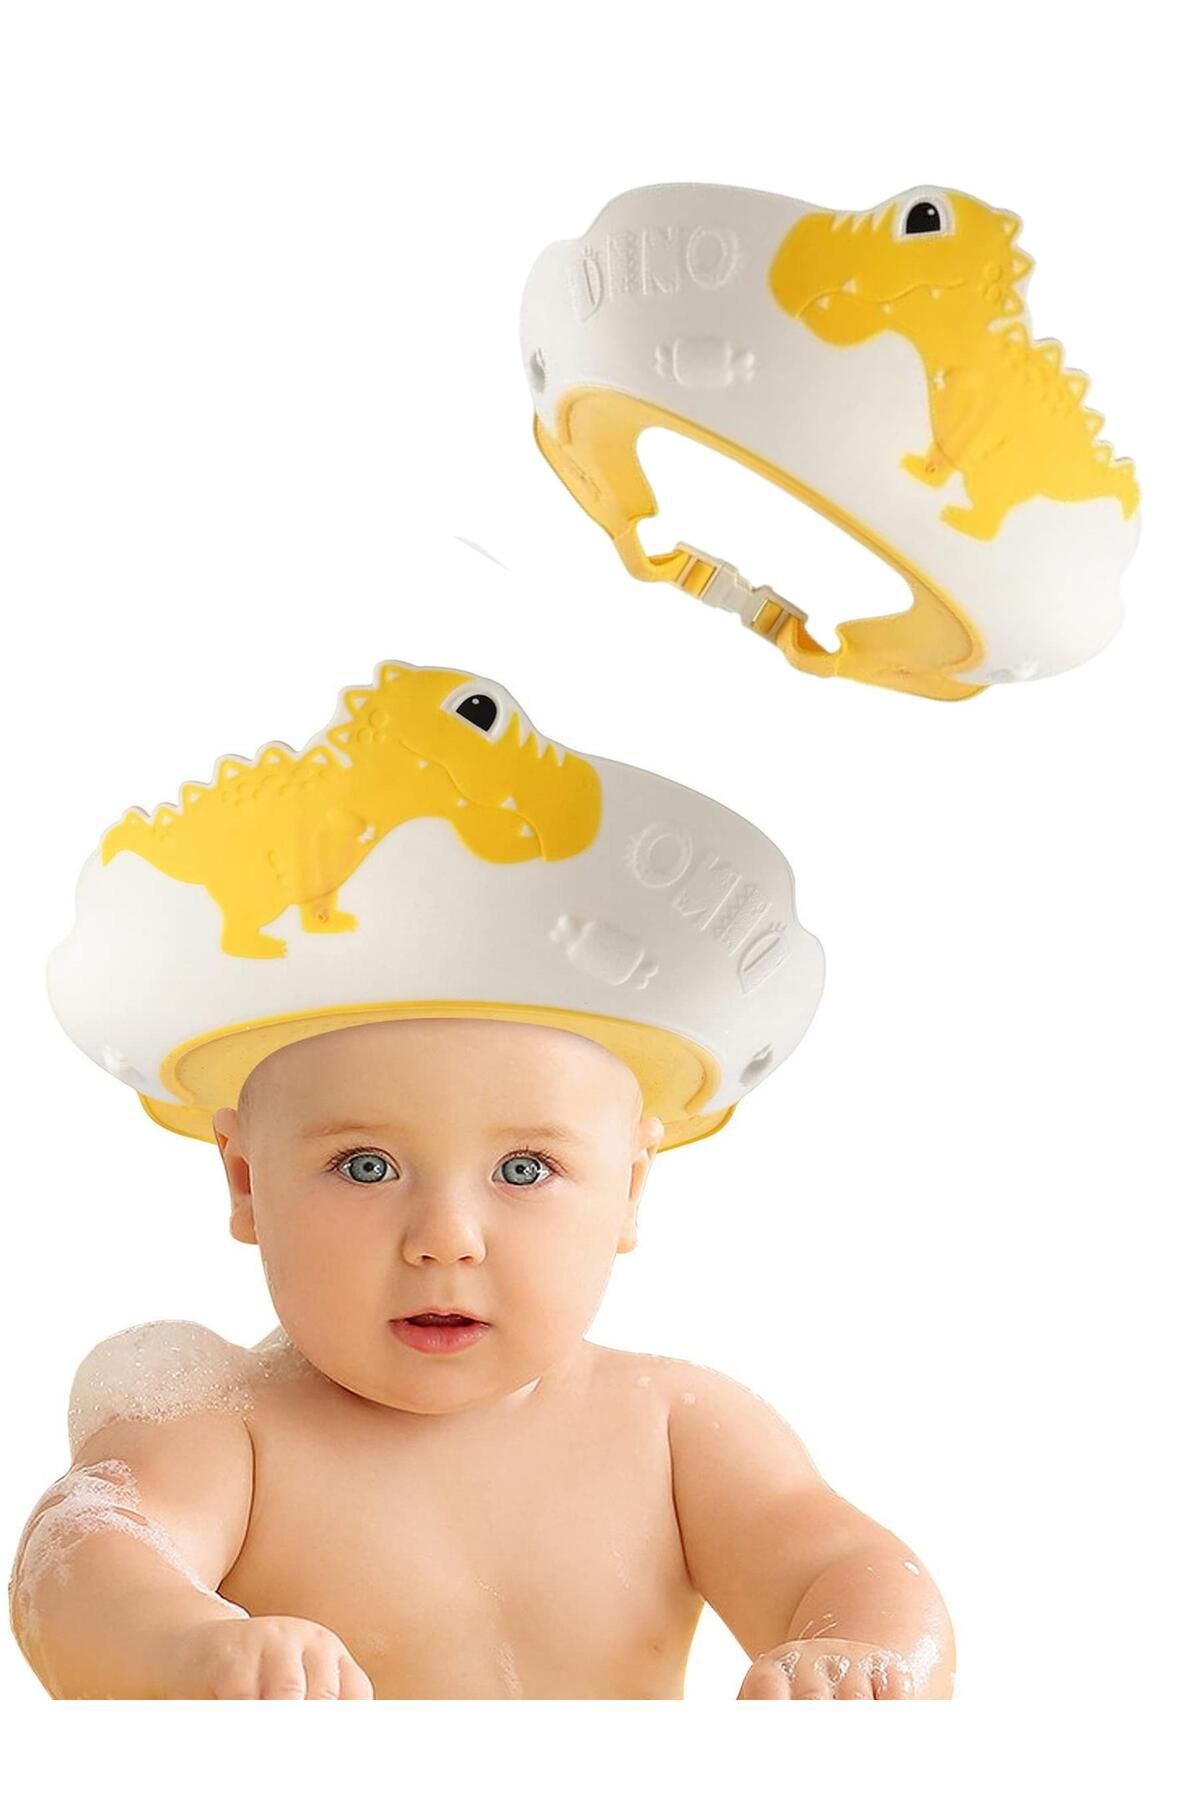 MooieBaby's Dino Banyo Şapkası , Slikon Çocuk Duş Tacı , Sevimli Dinazor , Ayarlanabilir Tasarım, 6ay-9yaş